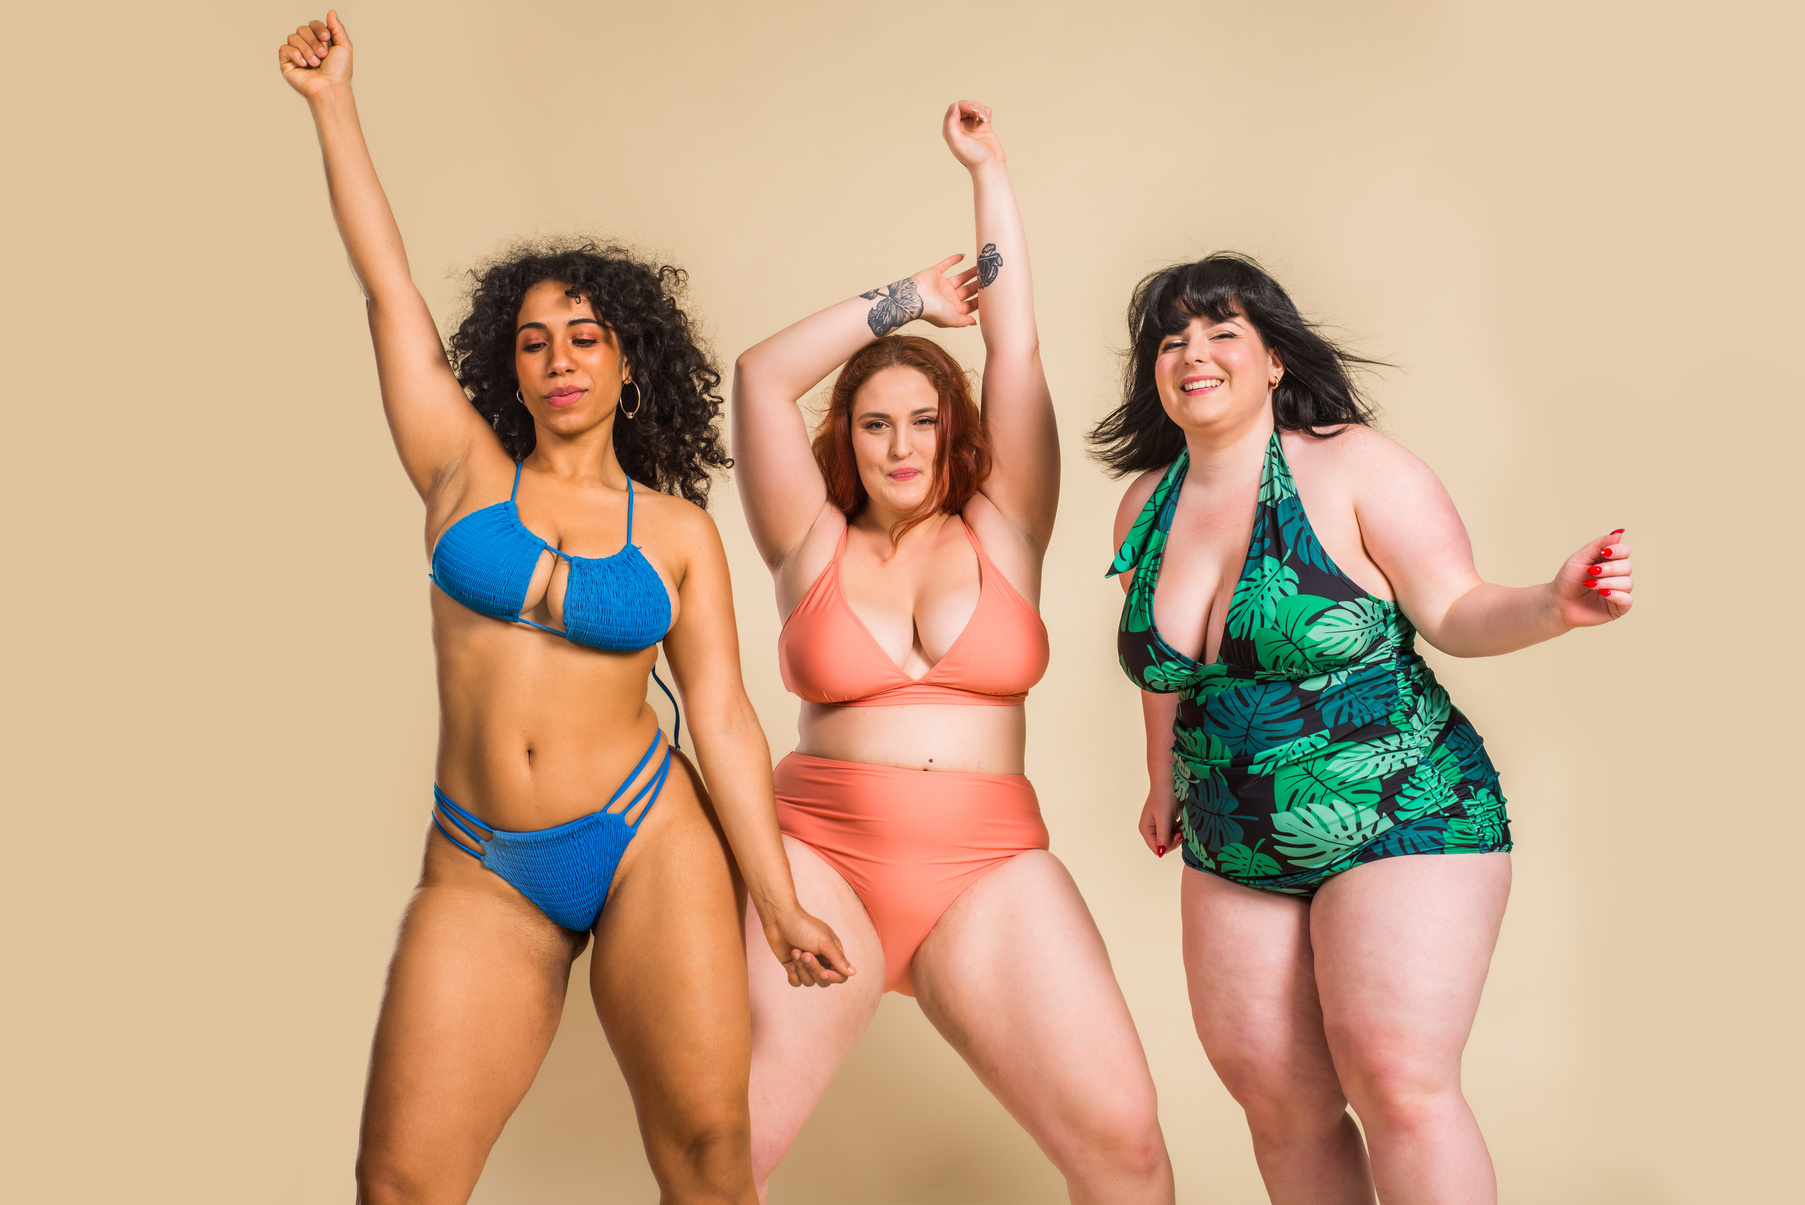 Plus Size Women Posing for Body Acceptance